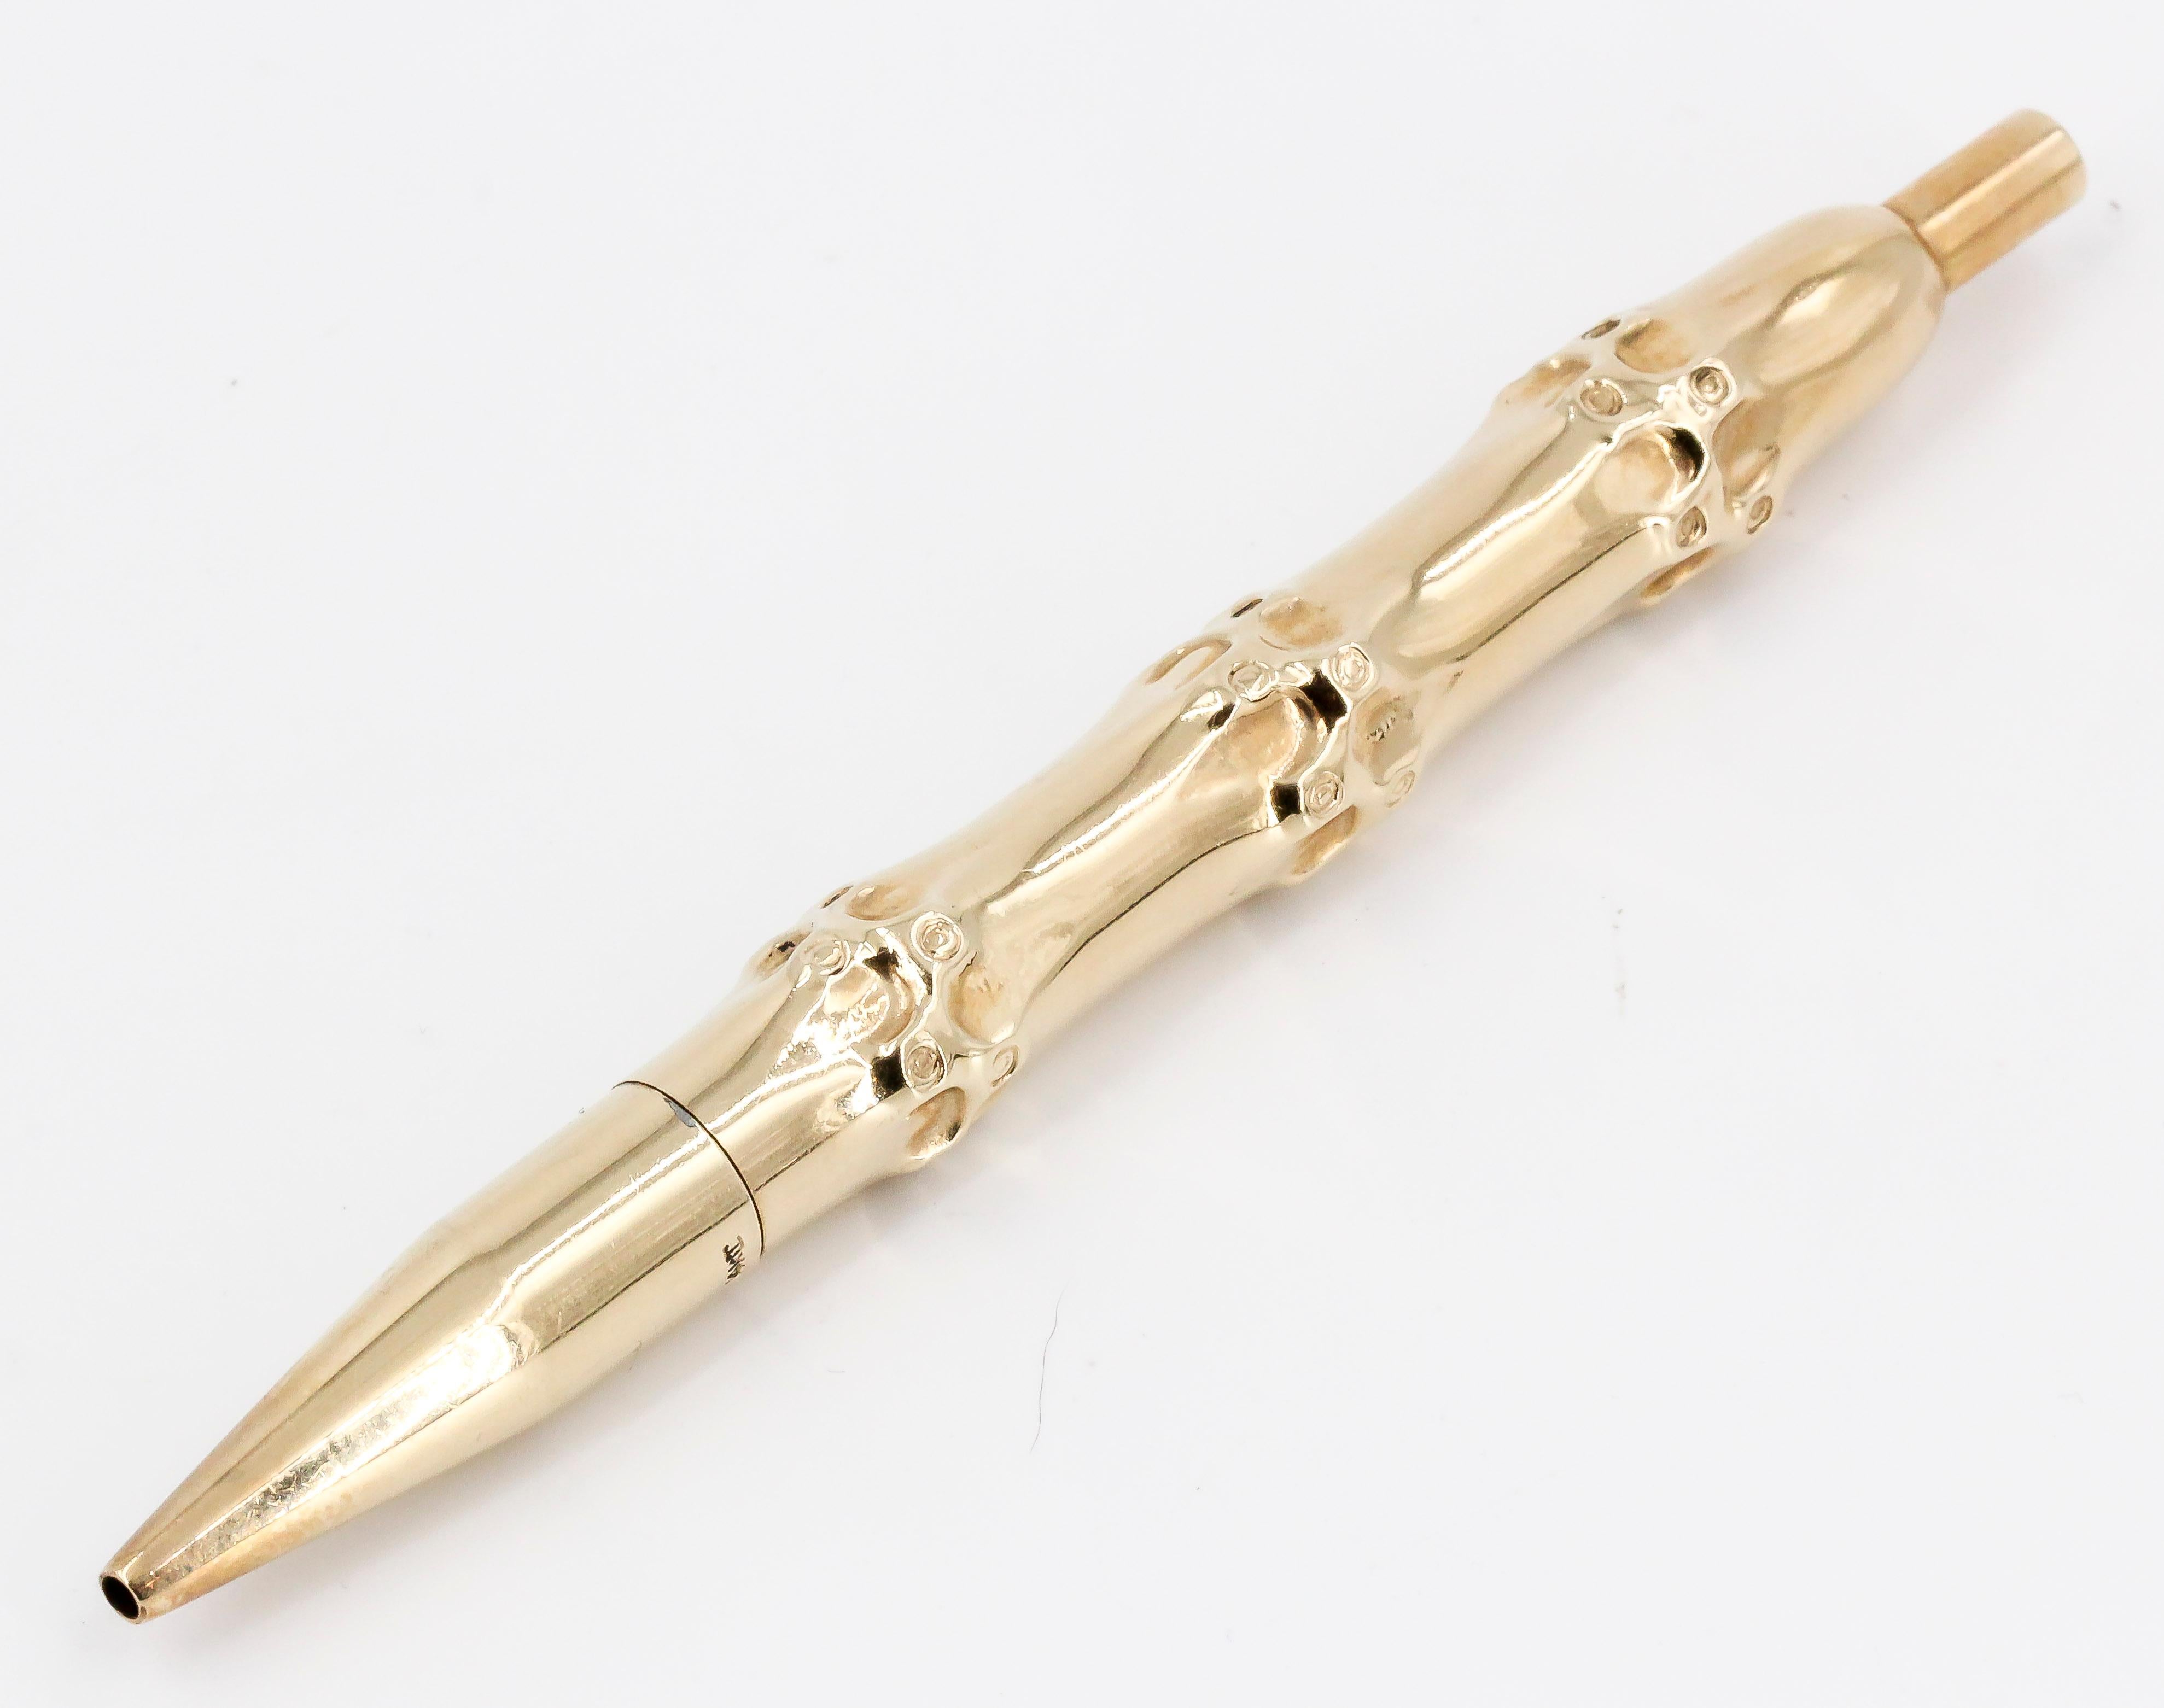 Elegant 14K yellow gold bamboo motif purse ballpoint pen. 

Hallmarks: 14kt